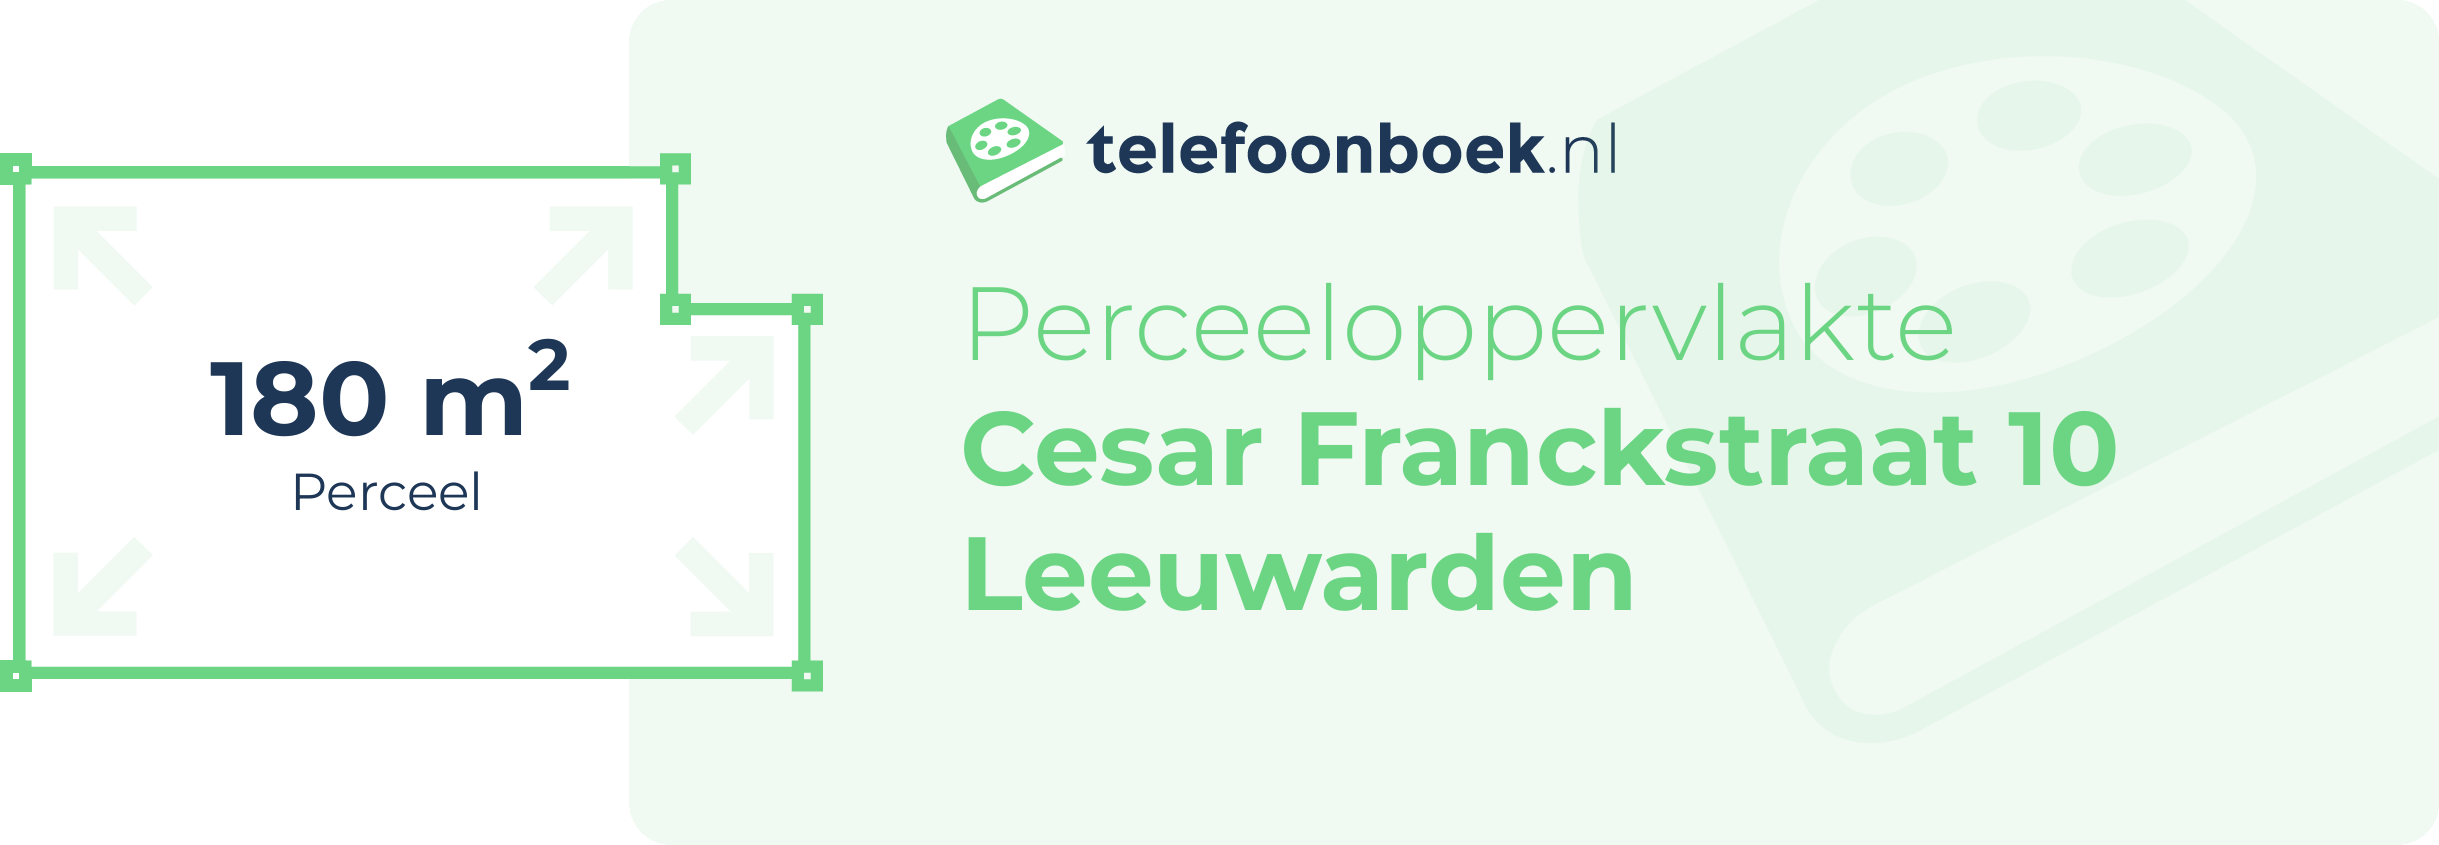 Perceeloppervlakte Cesar Franckstraat 10 Leeuwarden